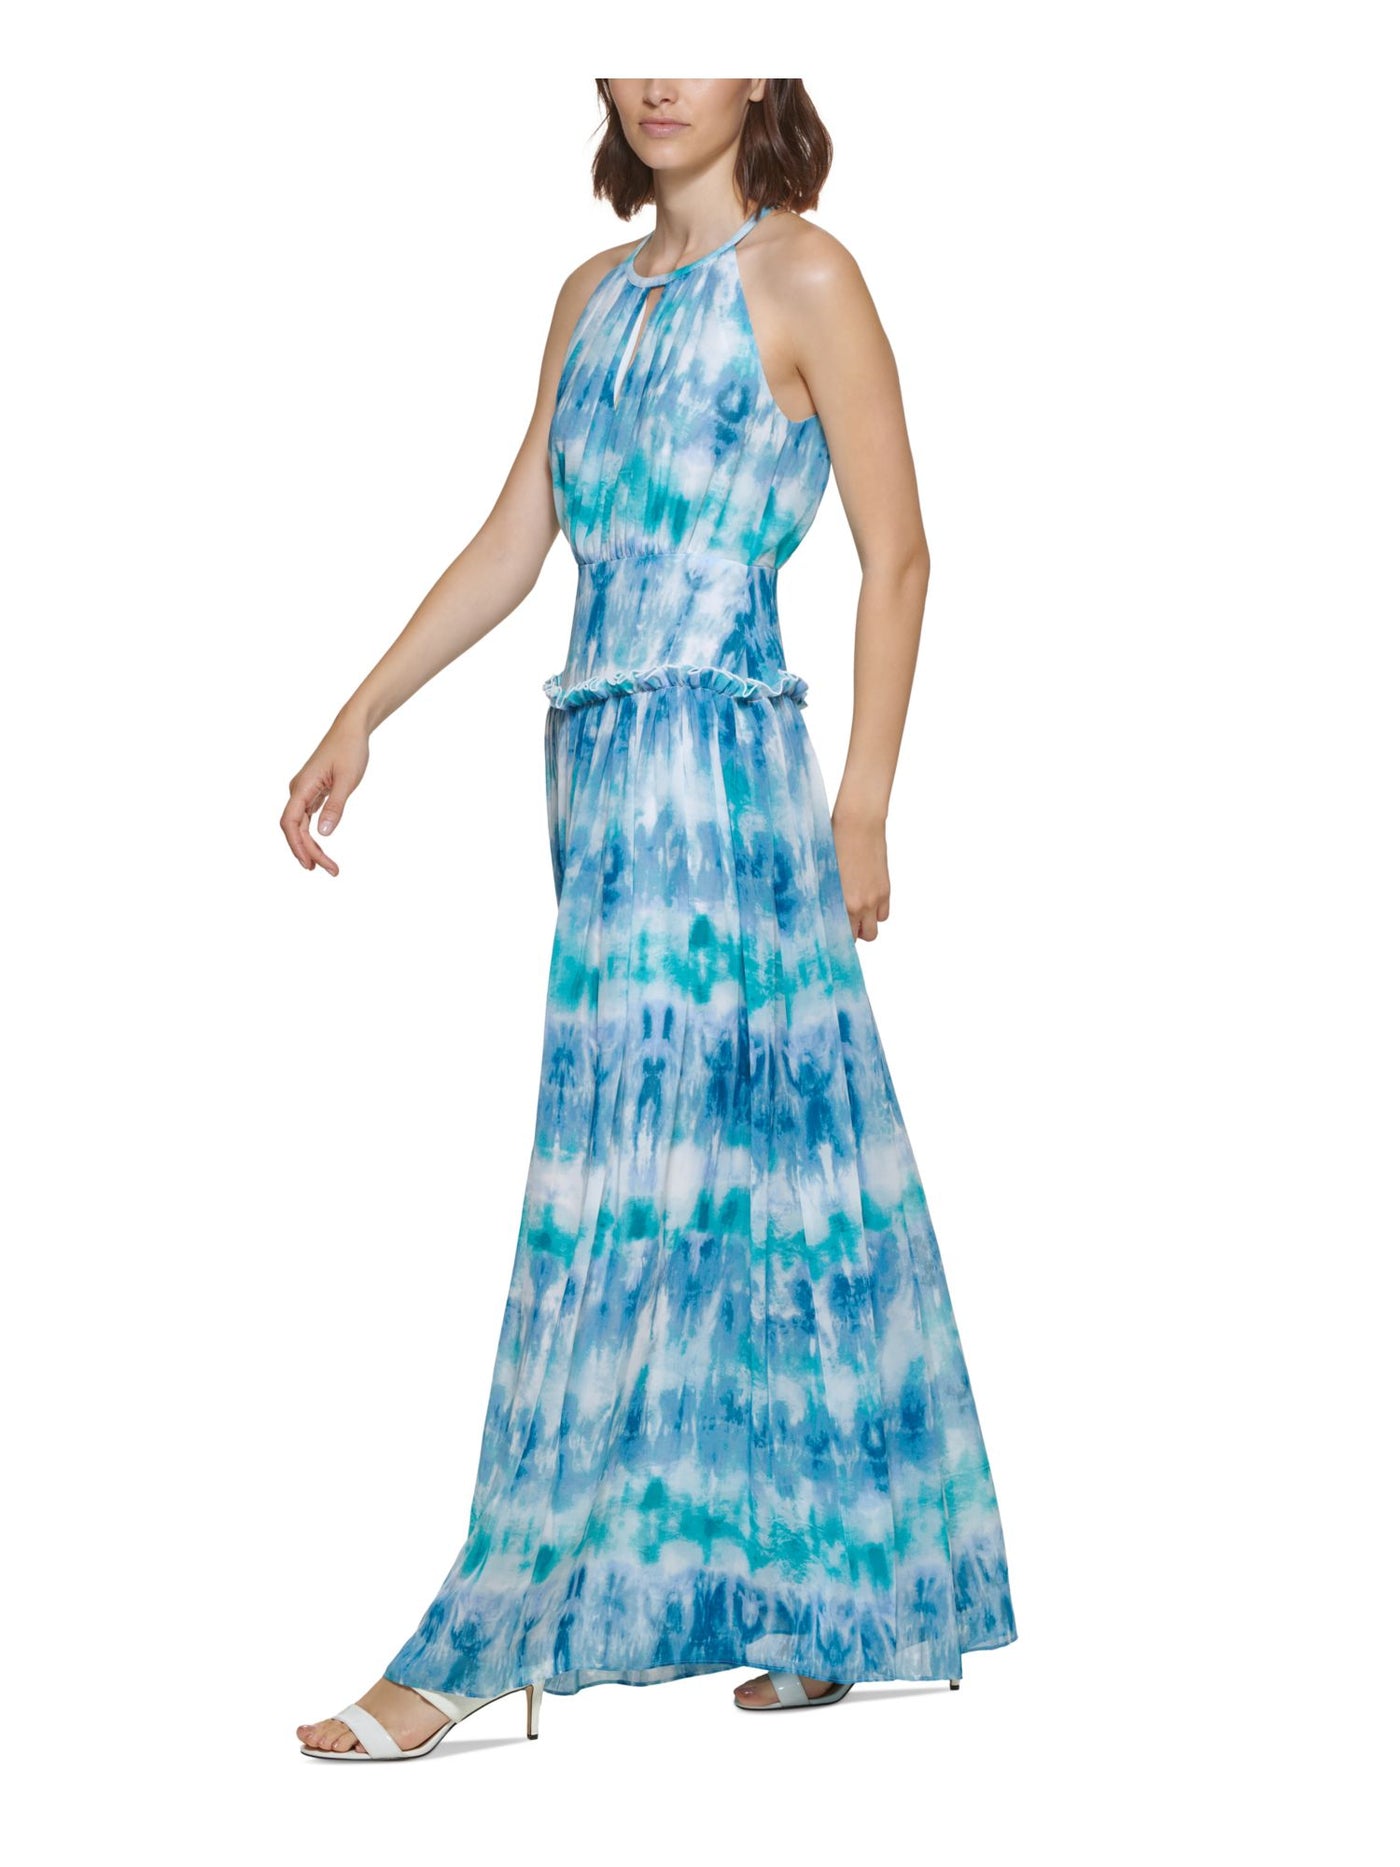 CALVIN KLEIN Womens Blue Zippered Cut Out Ruffle Trim Tie Dye Sleeveless Round Neck Full-Length Formal Gown Dress 14